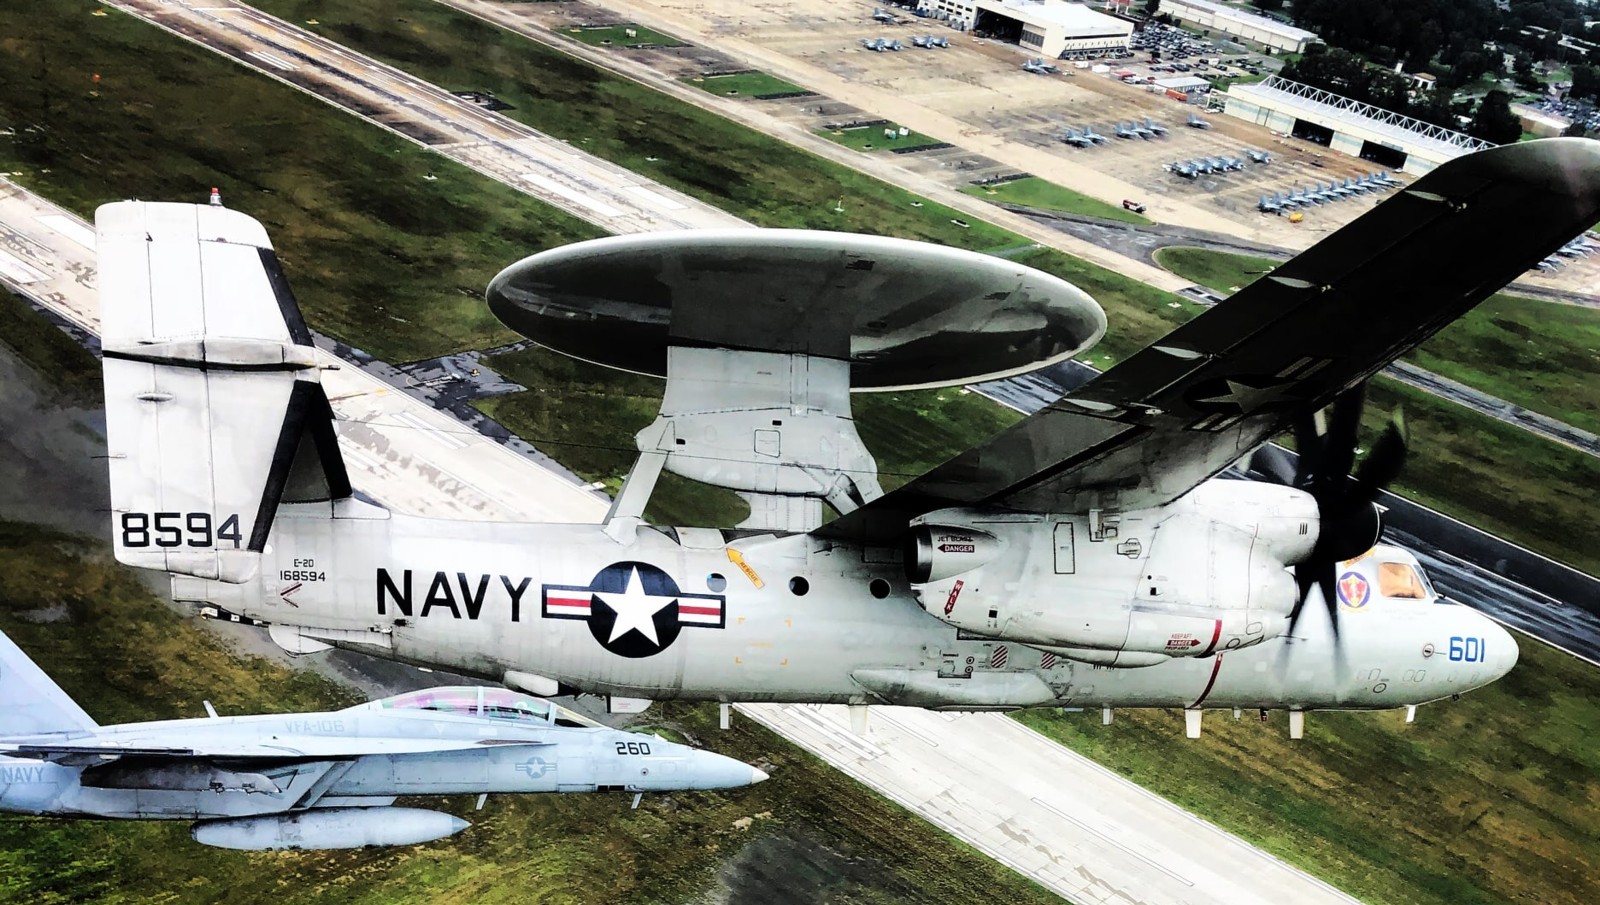 vaw-121 bluetails airborne command and control squadron us navy e-2d advanced hawkeye grumman cvw uss 81